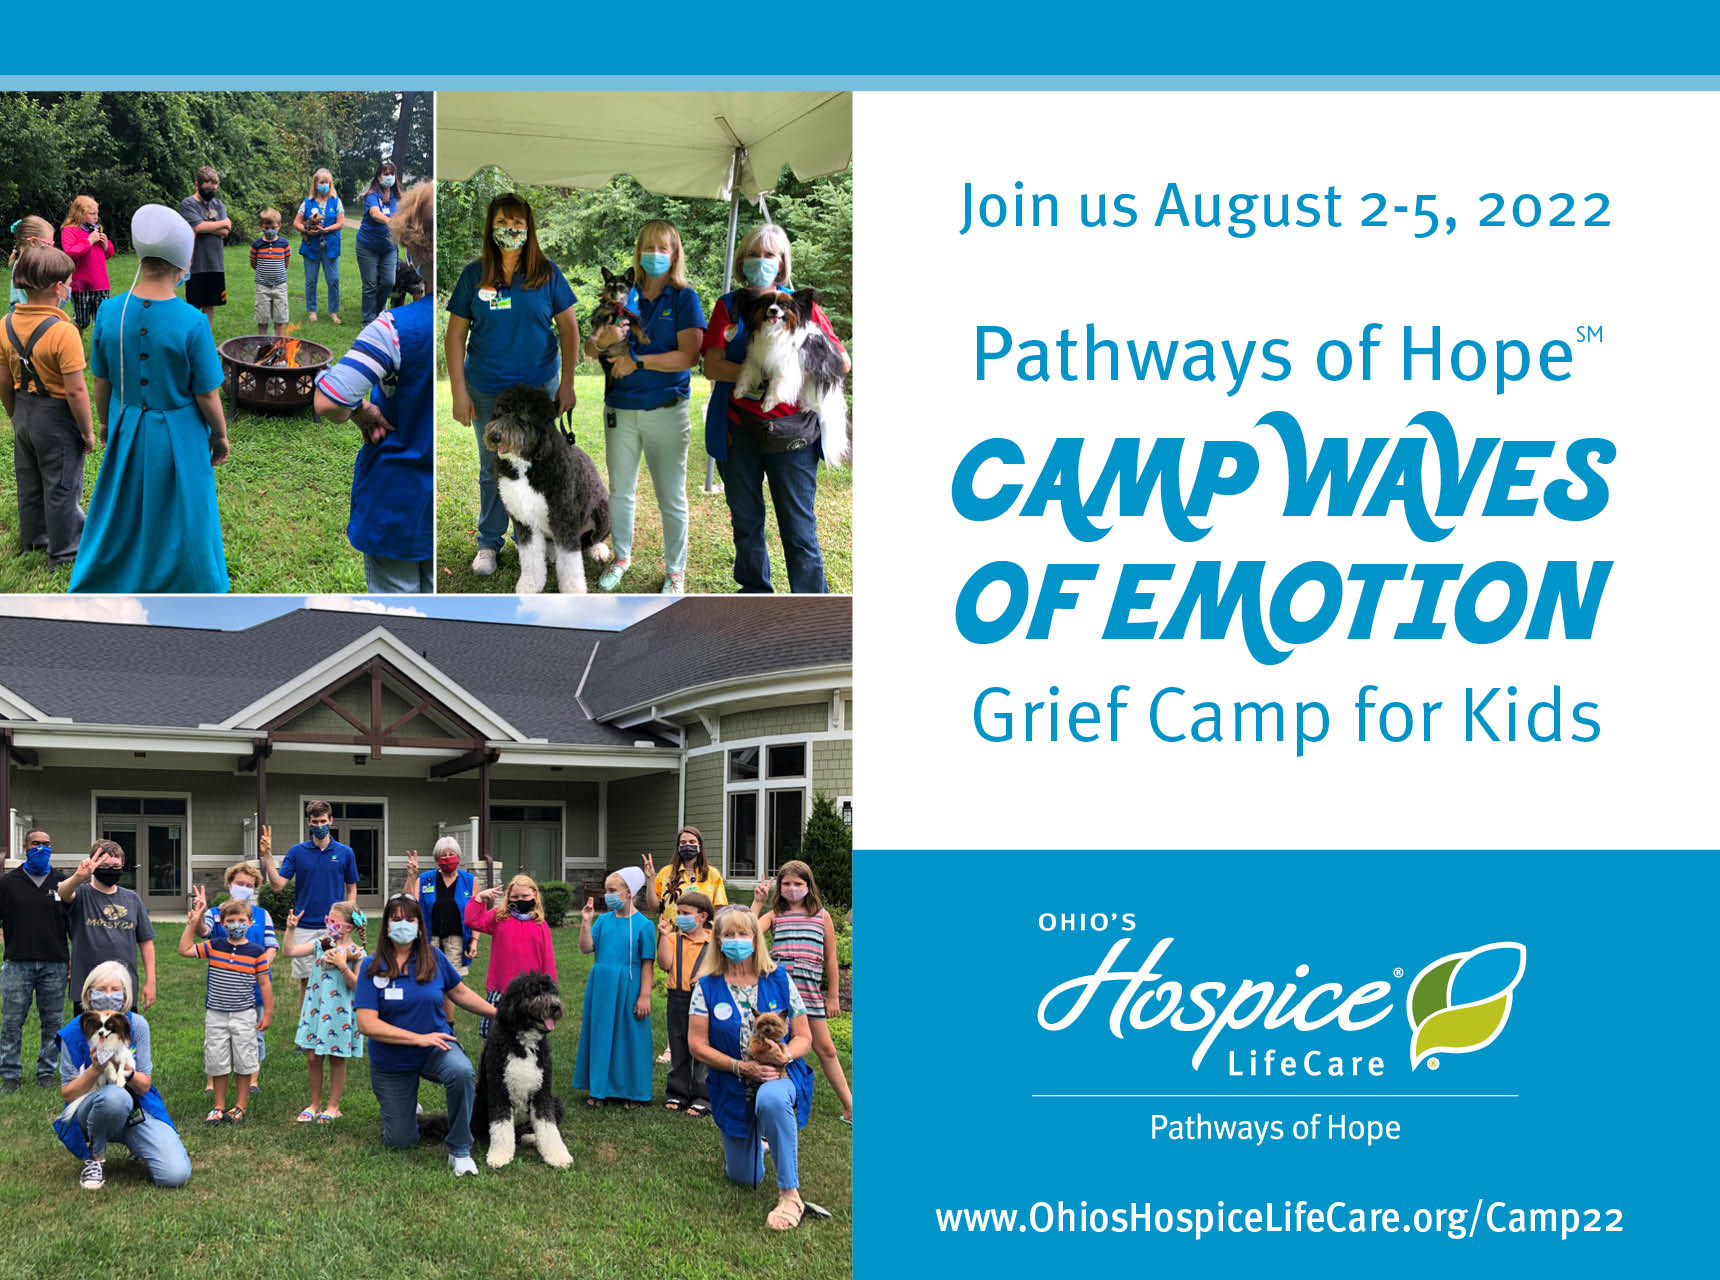 Pathways of Hope Camp Waves of Emotion Grief Camp for Kids 2022